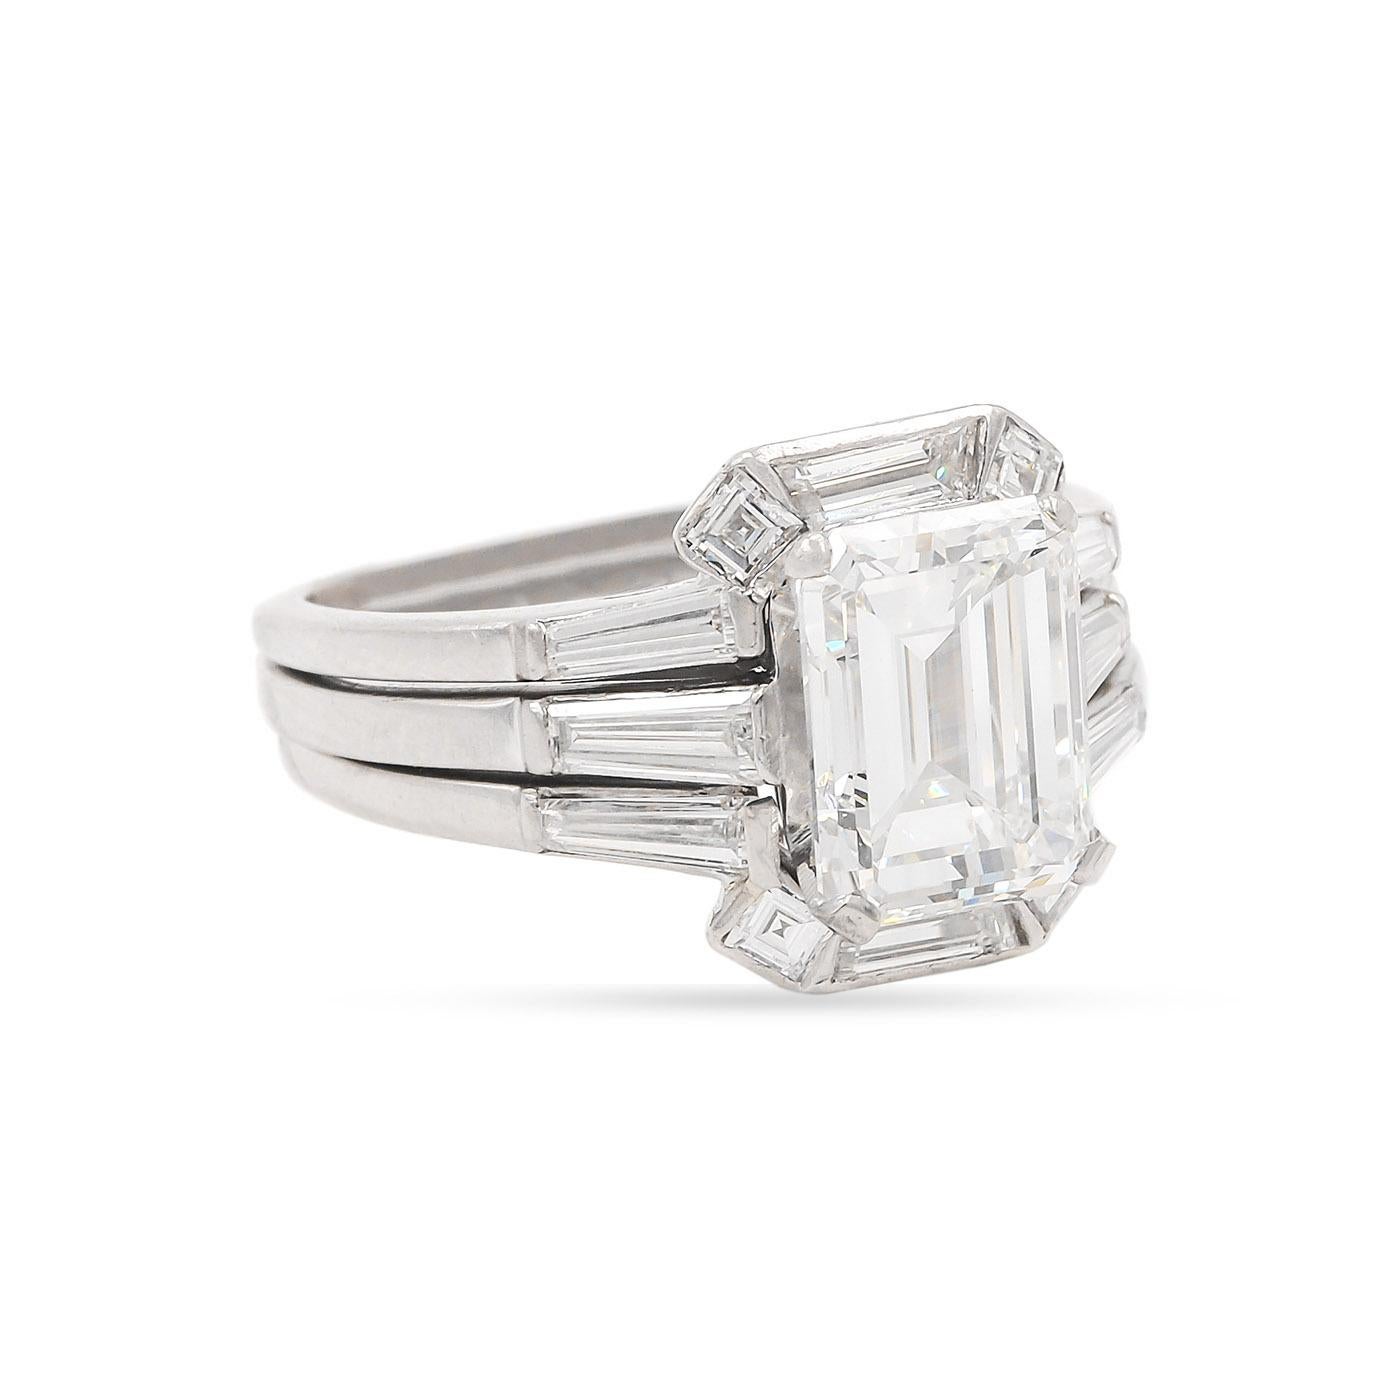 Women's Mid-Century 2.55 Carat GIA D Color & VS1 Emerald Cut Diamond Engagement Ring Set